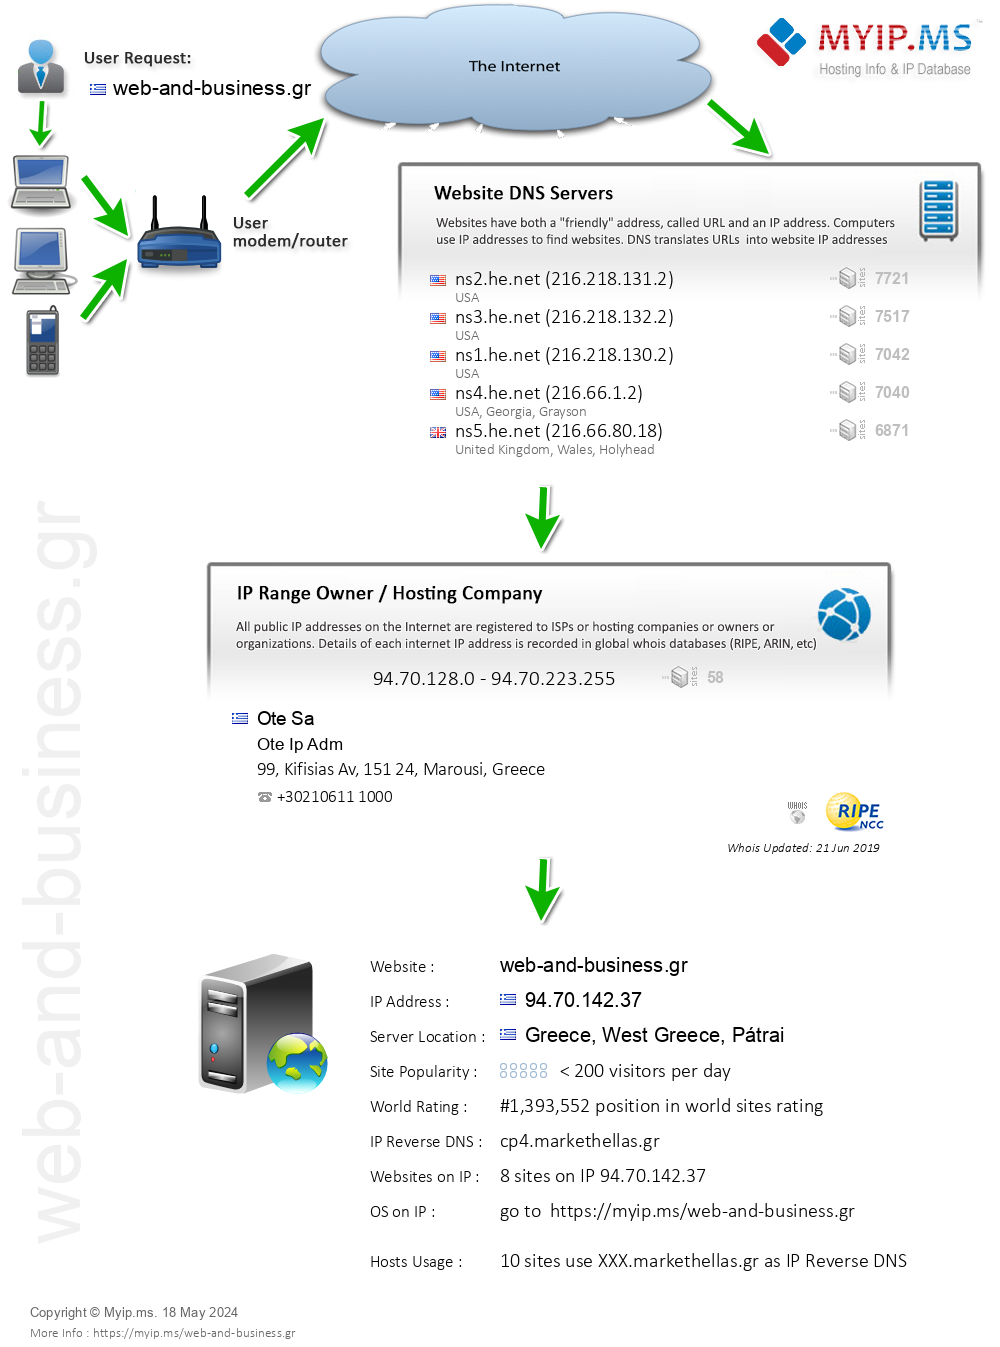 Web-and-business.gr - Website Hosting Visual IP Diagram